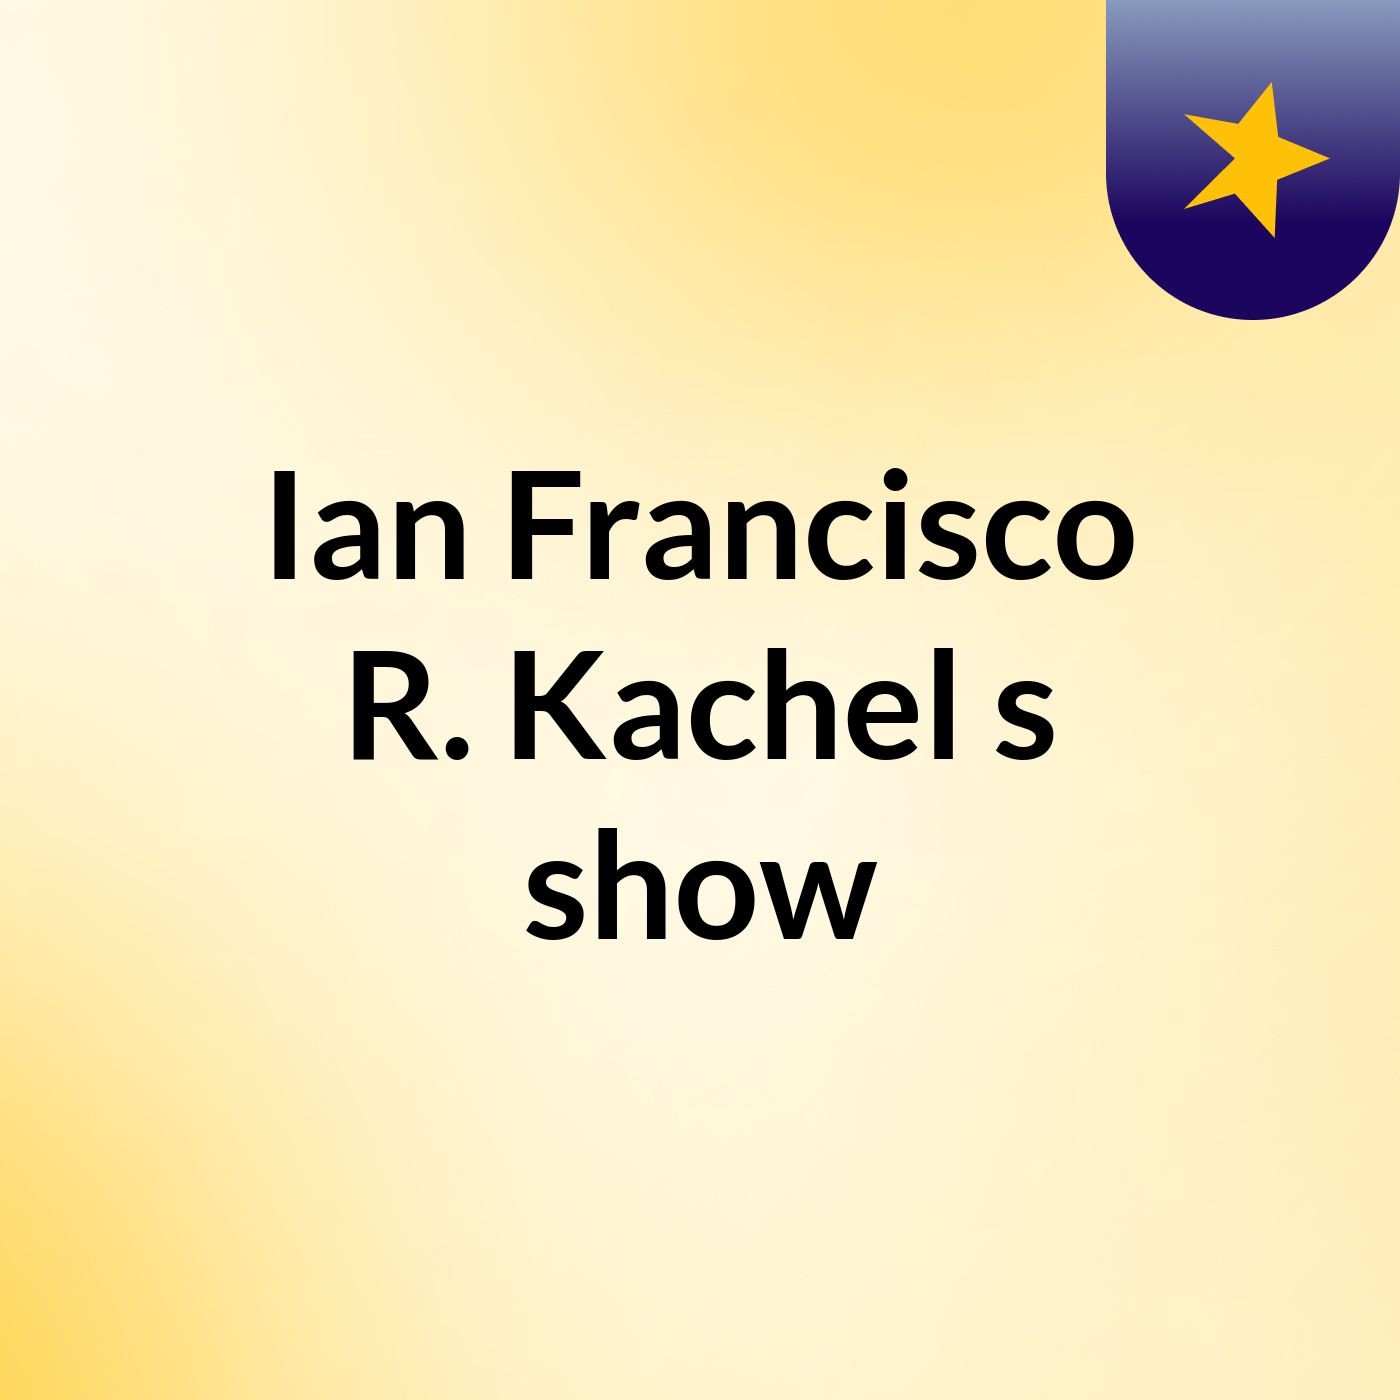 Ian Francisco R. Kachel's show